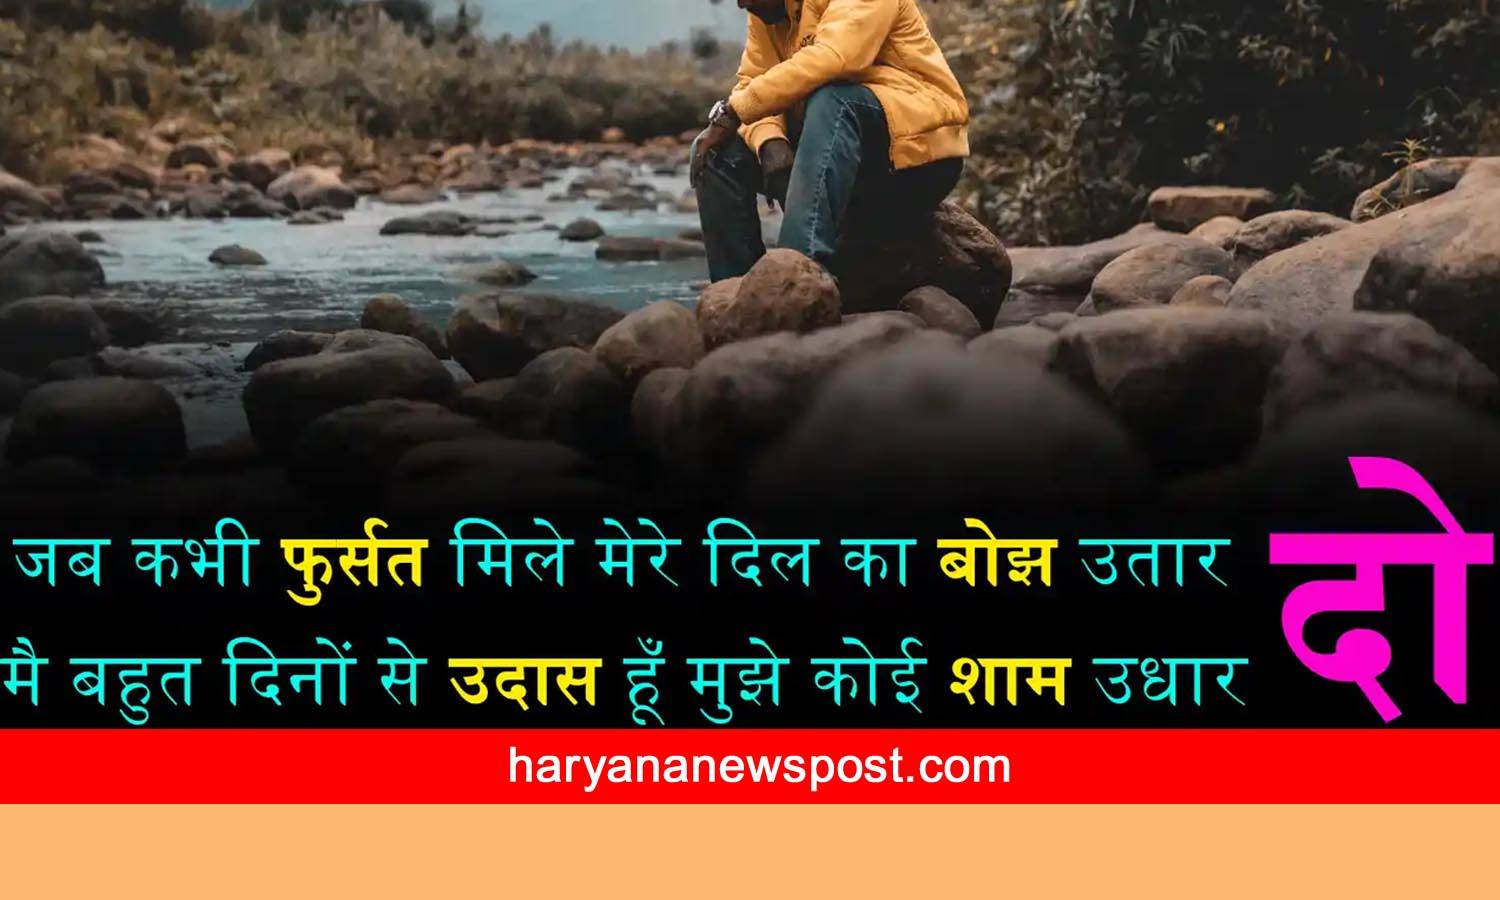 Emotional Sad Shayari in Hindi for Girlffriend and Boyfriend